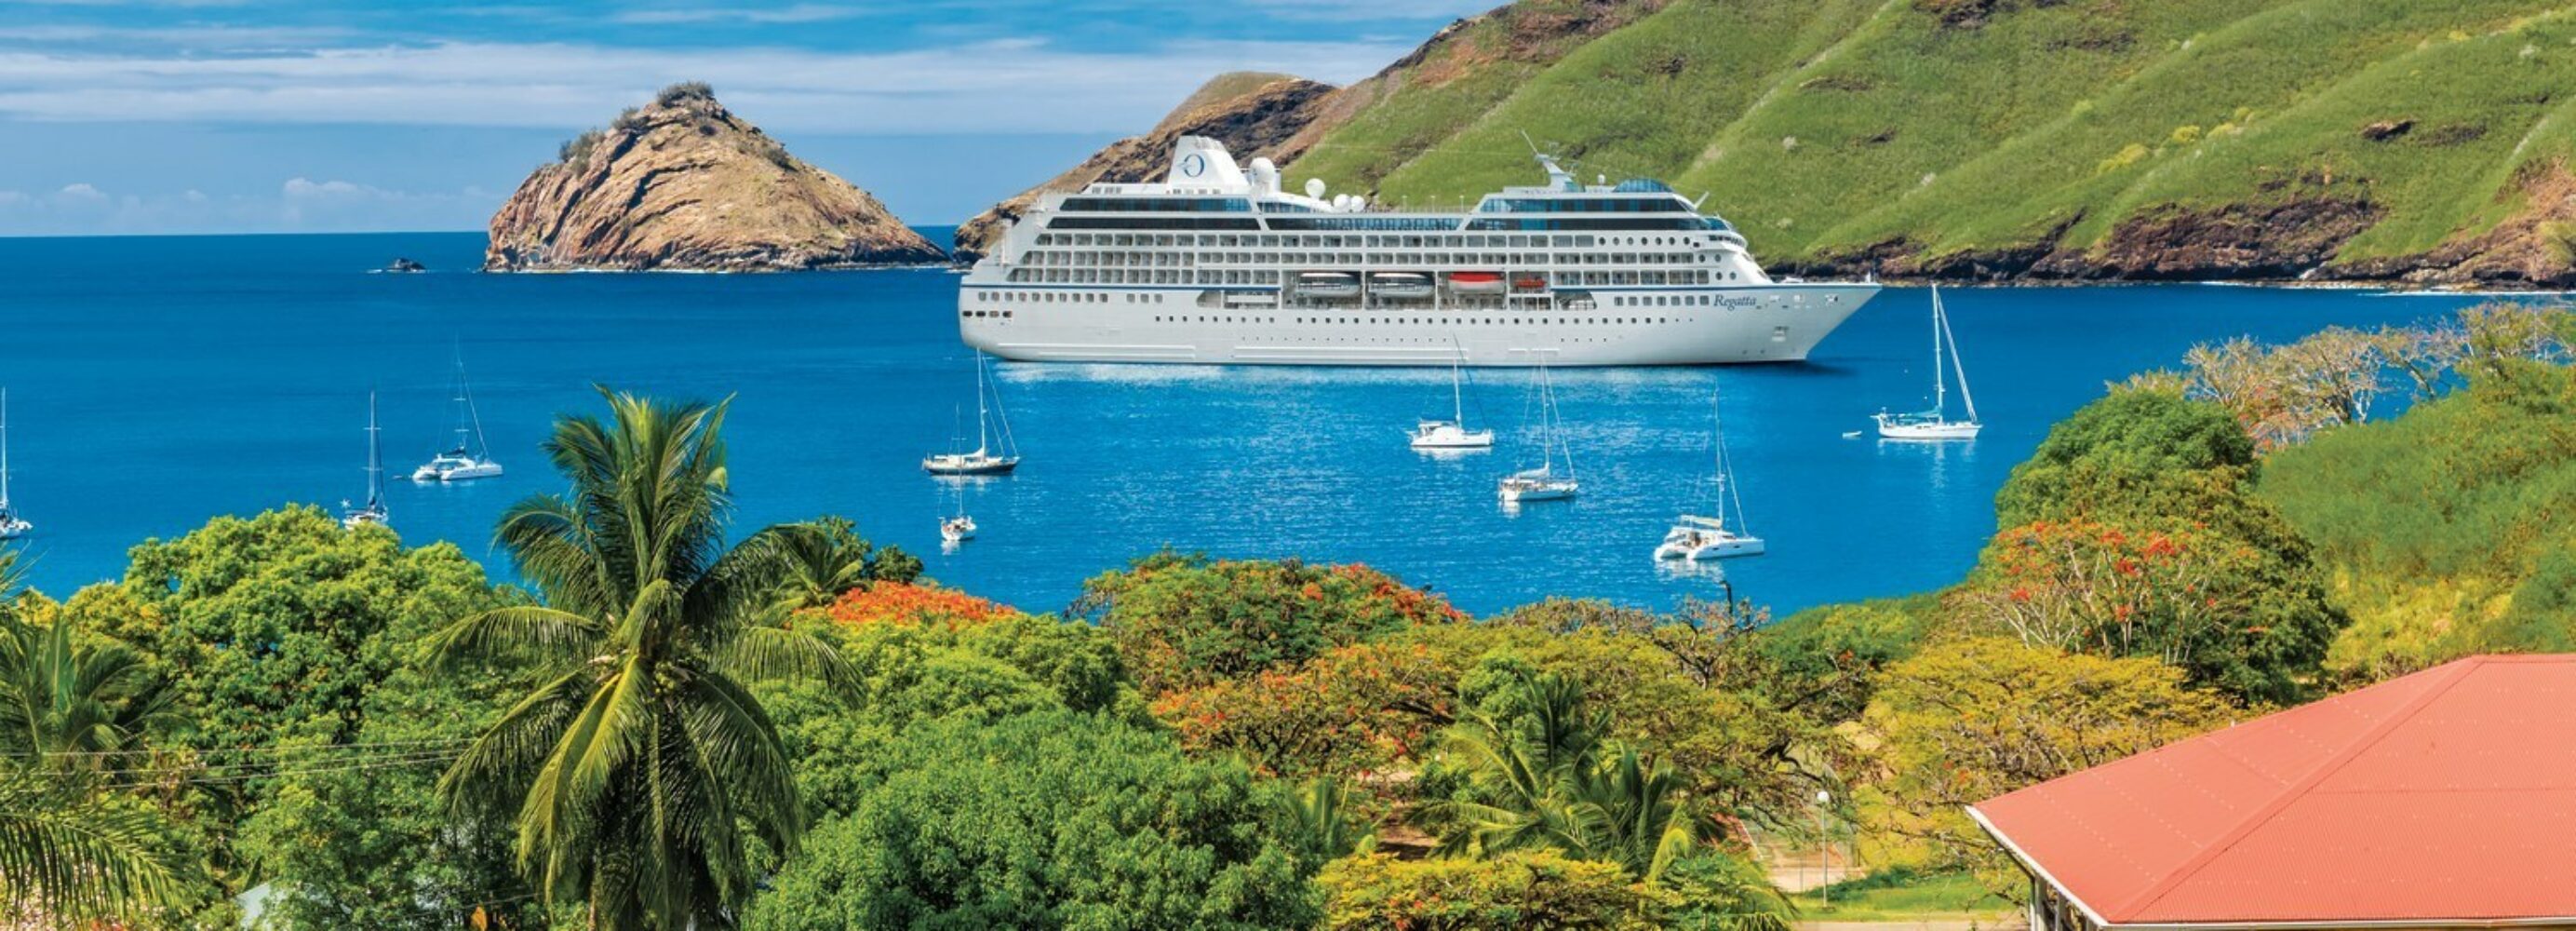 Tropics and exotics Oceania ship in islad paradise